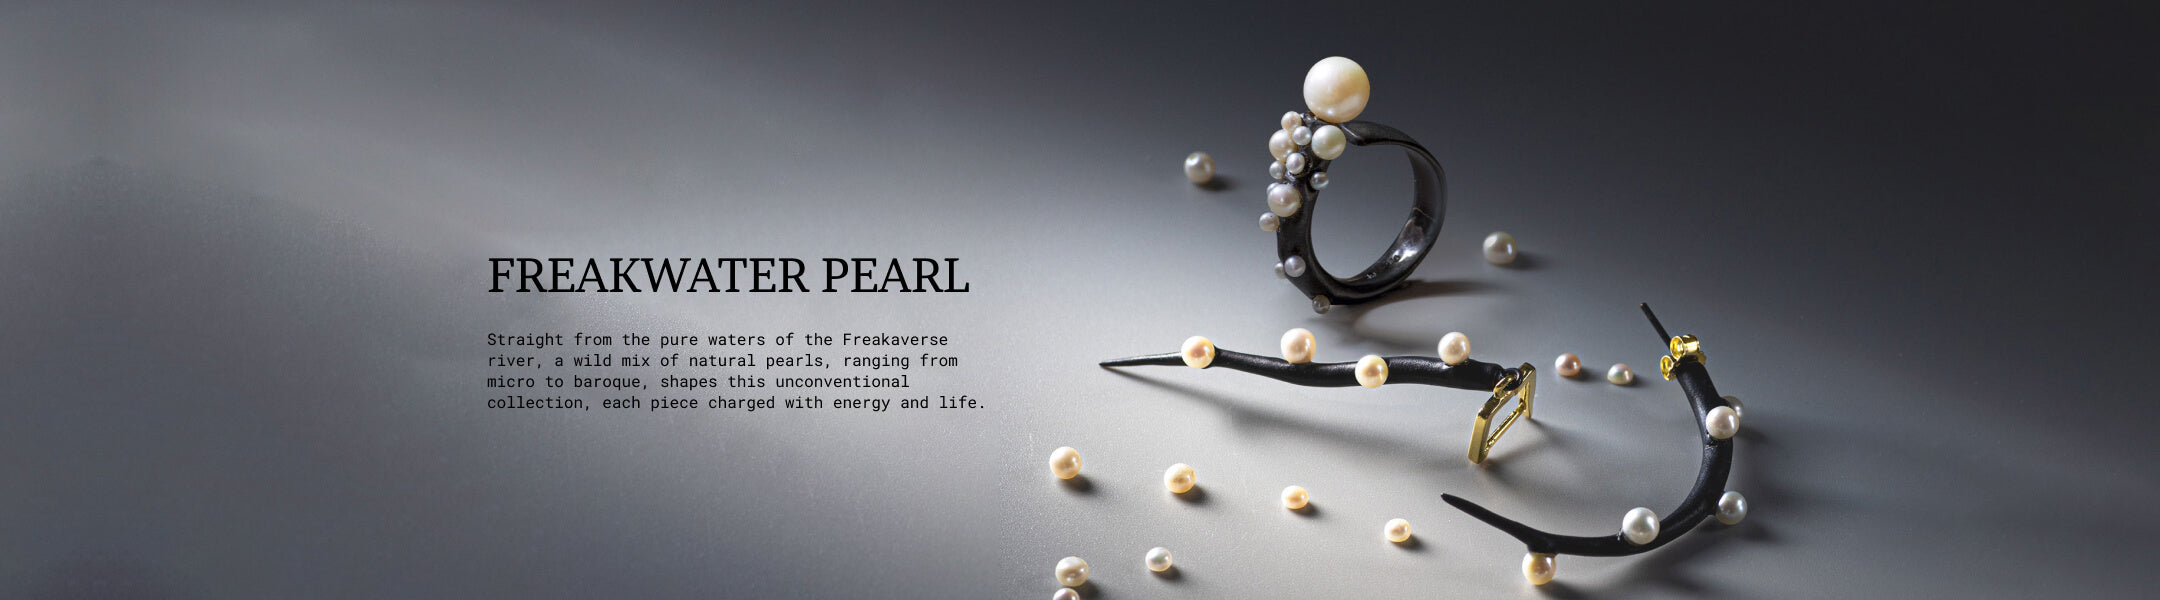 freakwater pearl collection german kabirski